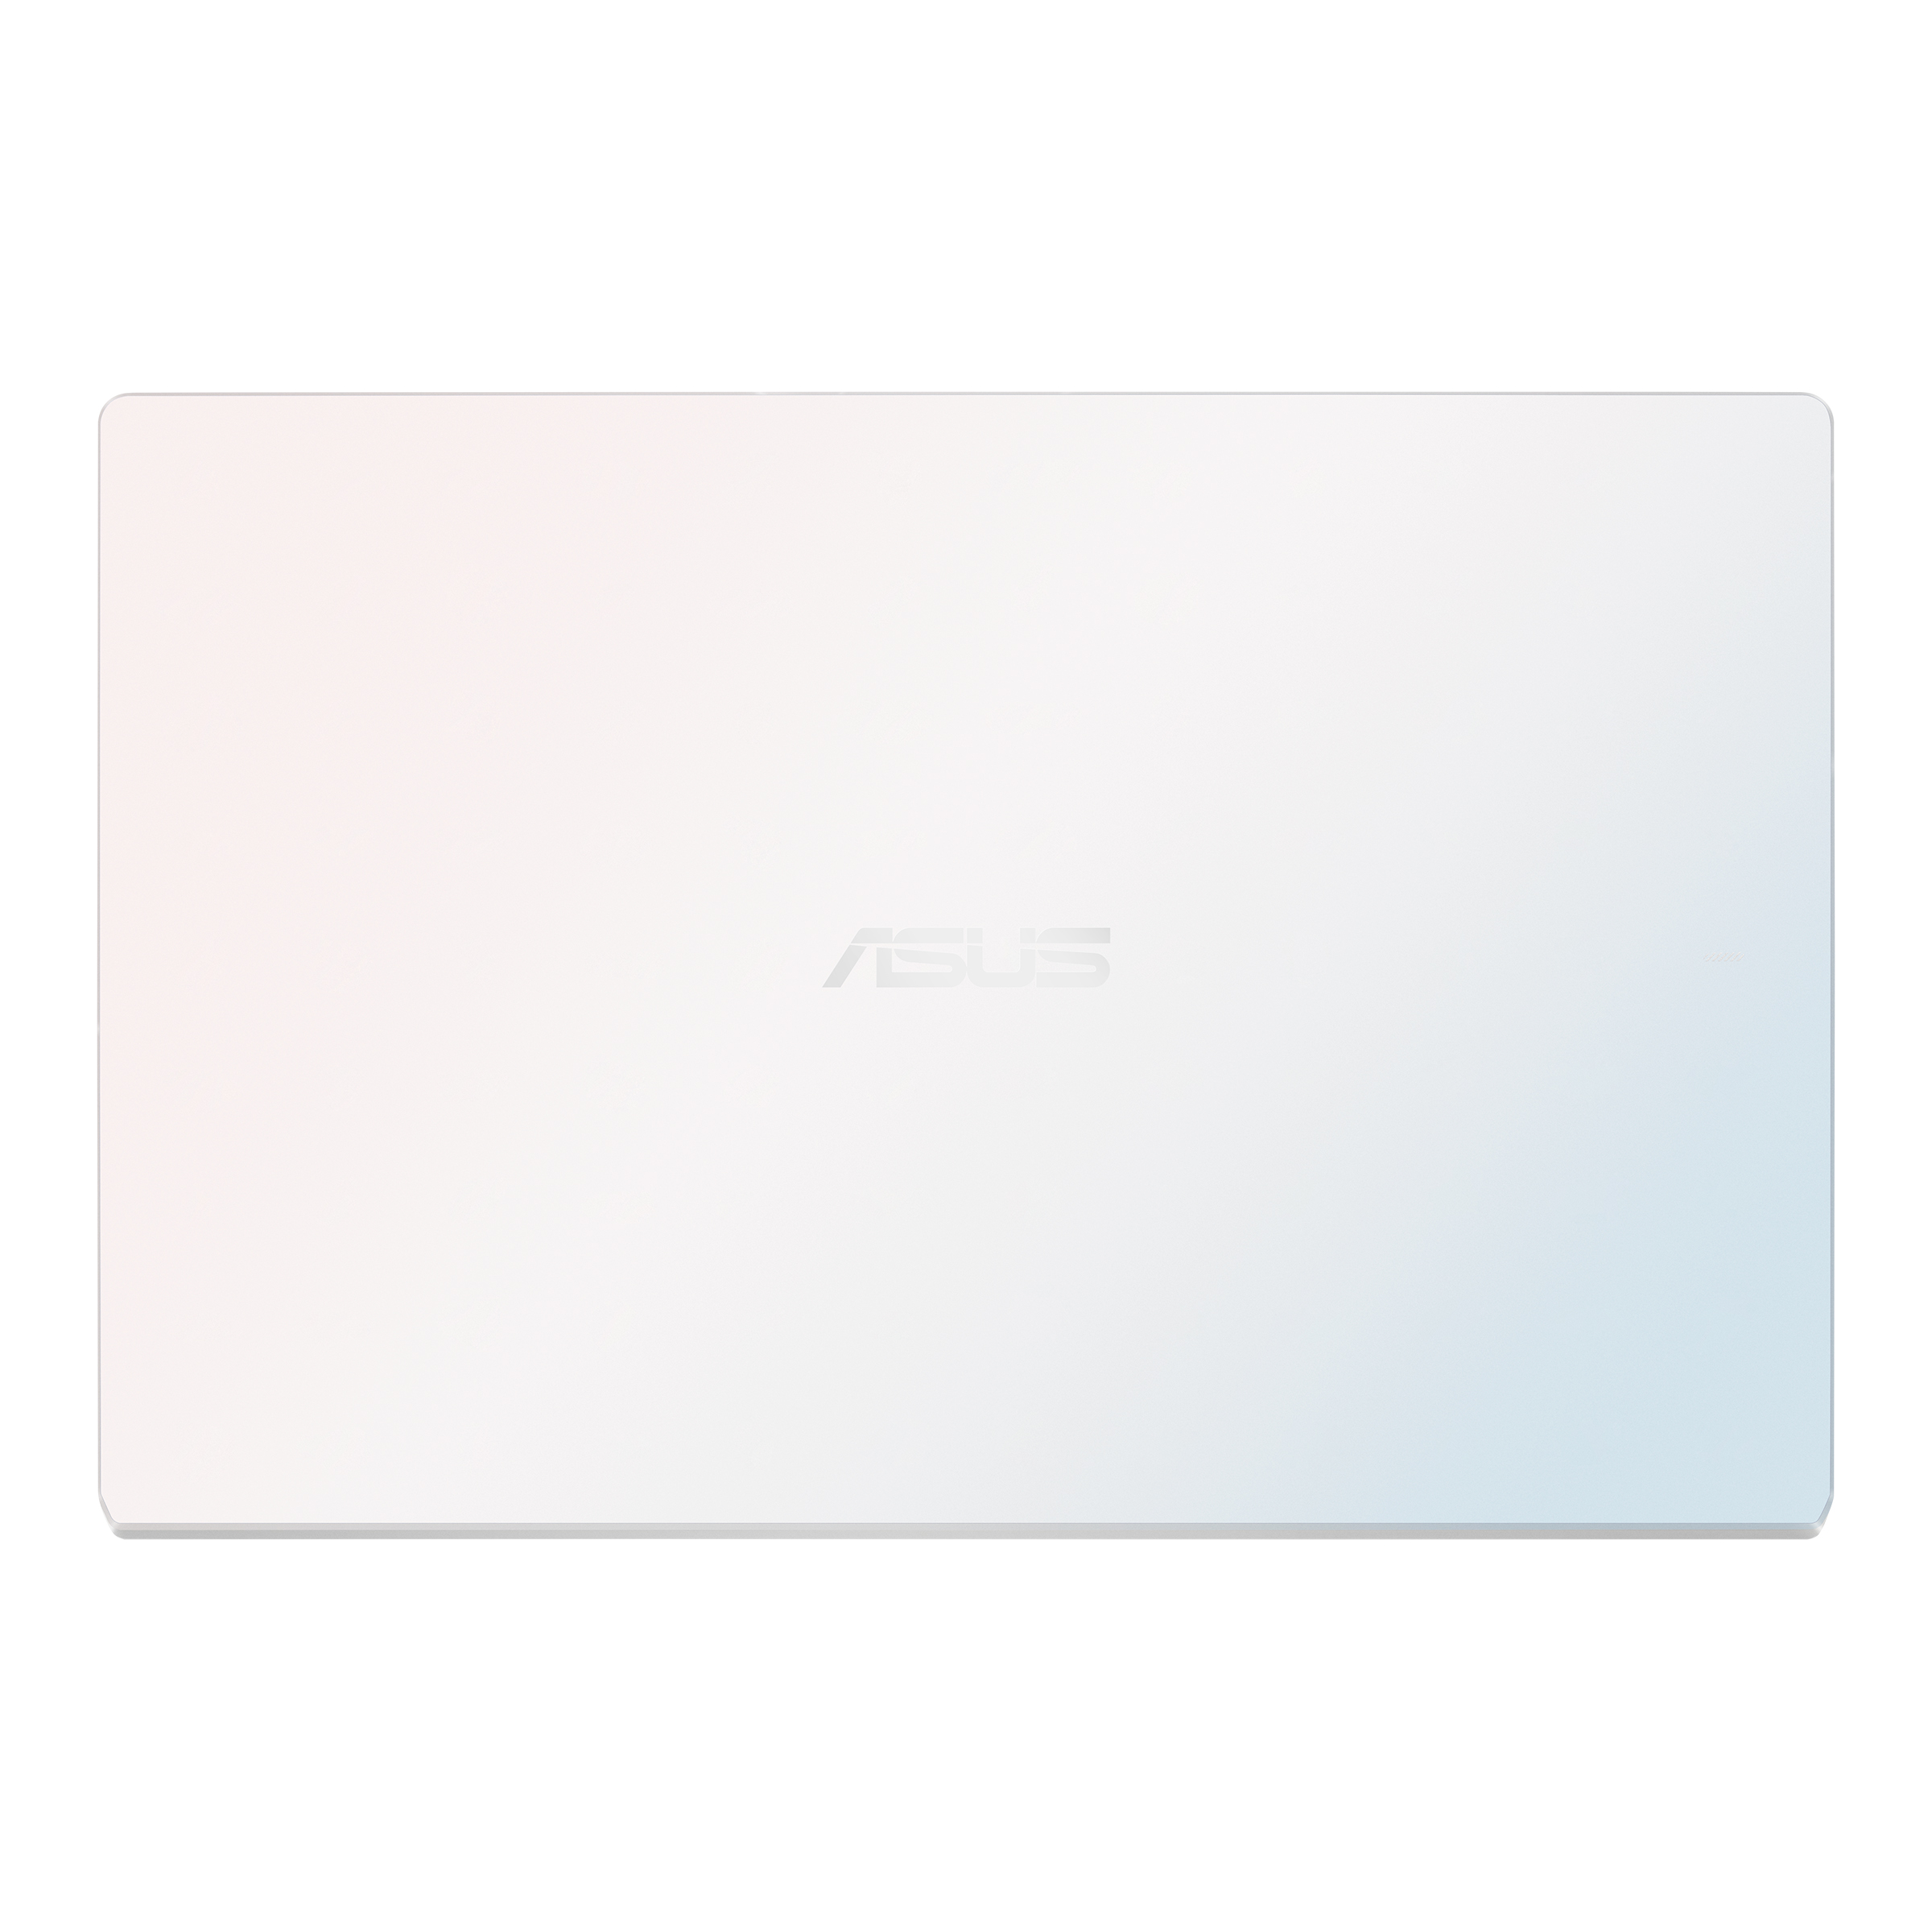 ASUS VivoBook 15.6" FHD Intel Pentium N5030, 4GB,128GB eMMC, White, Windows 11 Home S, L510MA-WS21-W - image 5 of 5